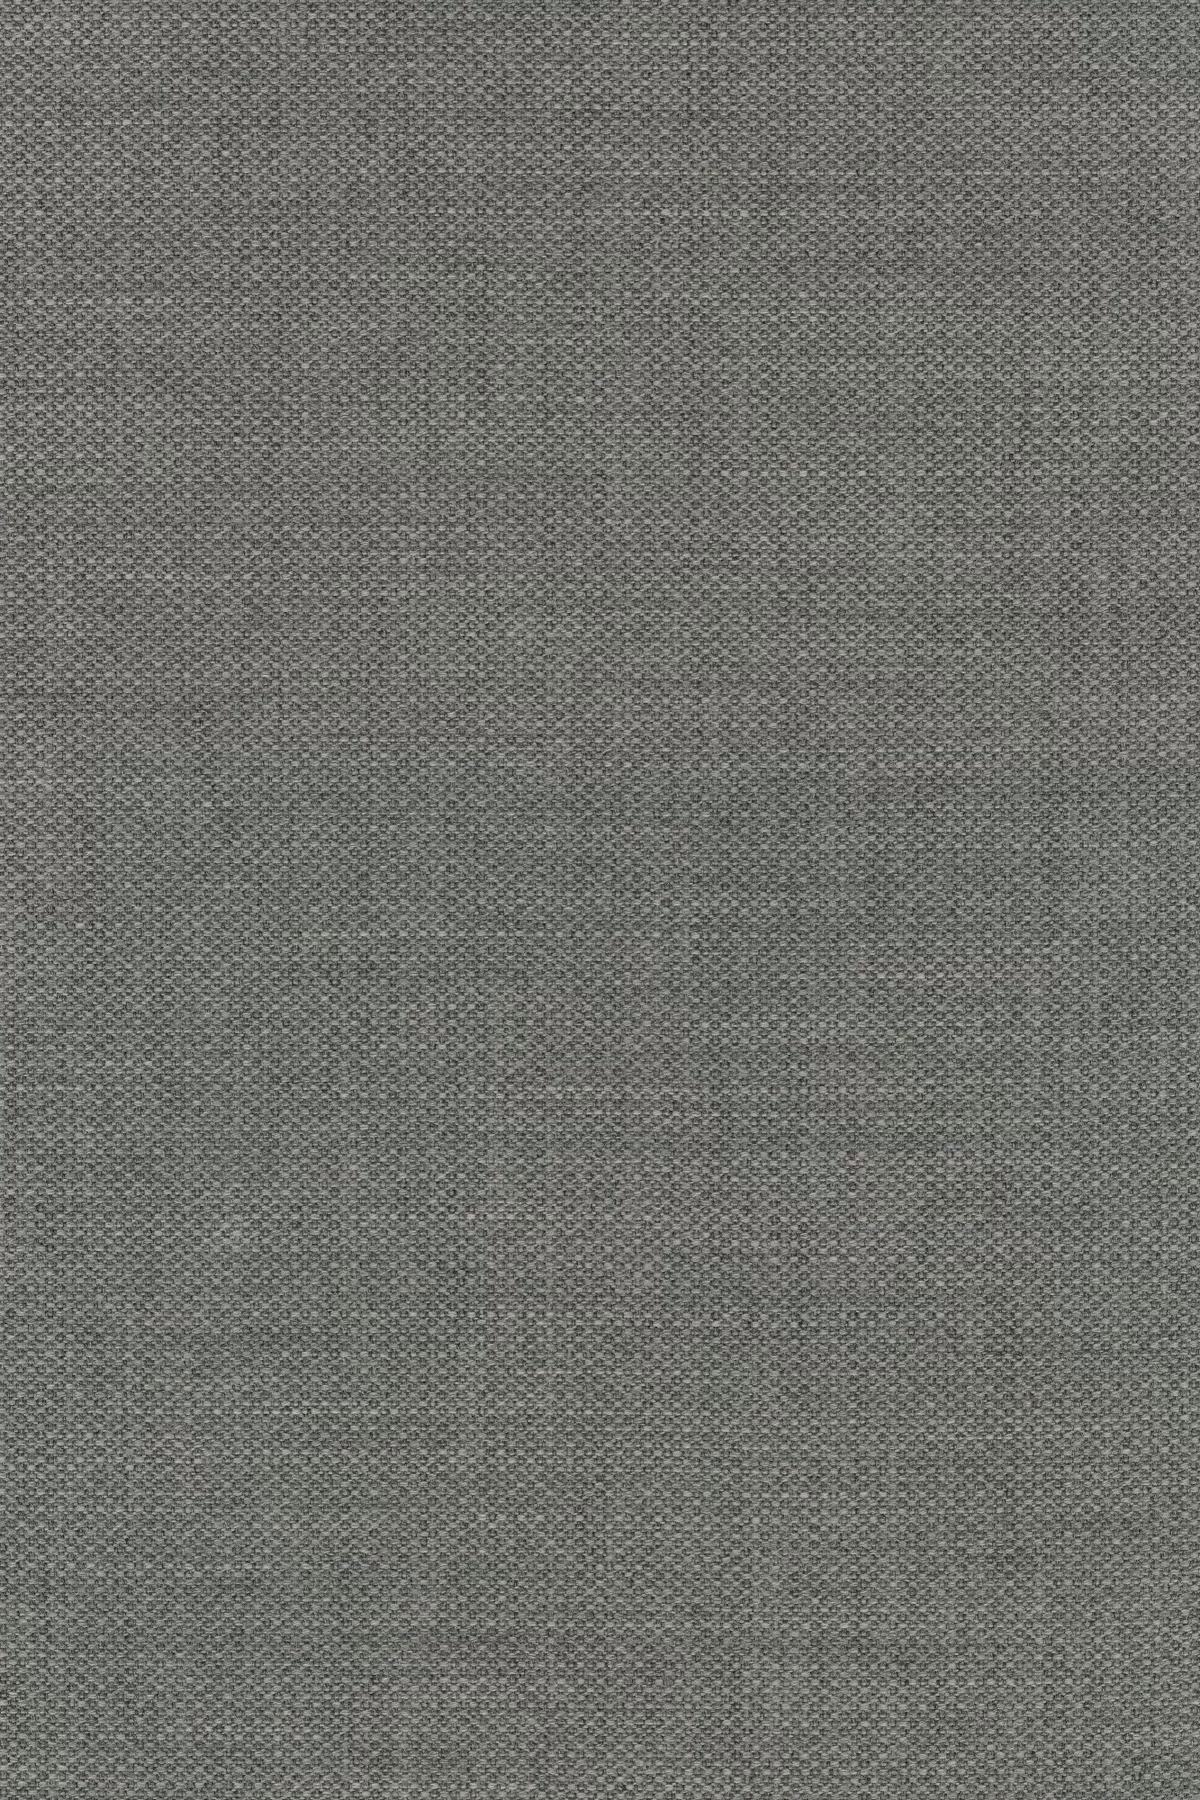 Fabric sample Fiord 151 grey